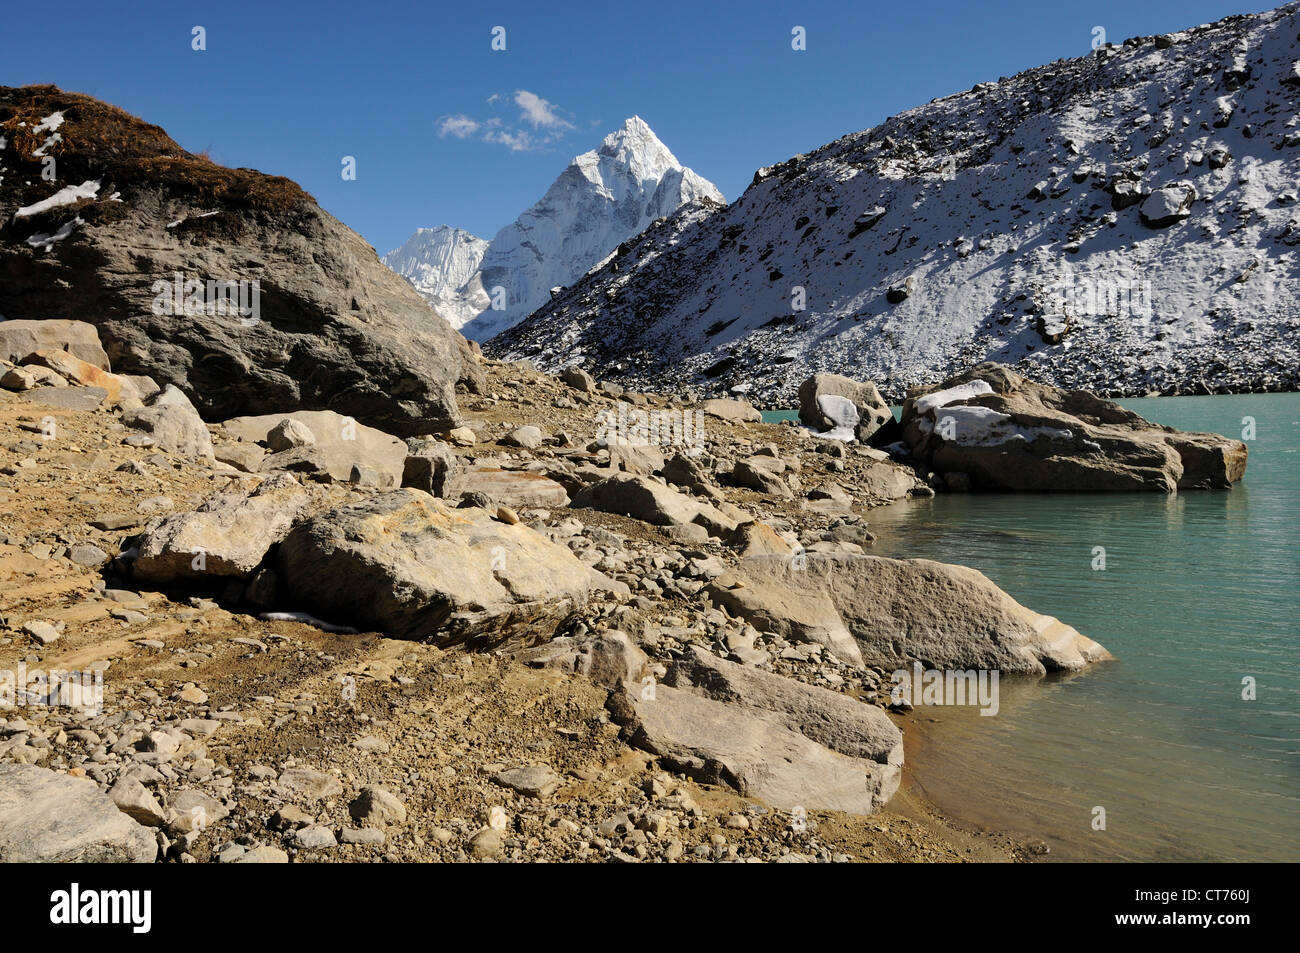 Chola Tsho lake in Nepal mountains Stock Photo